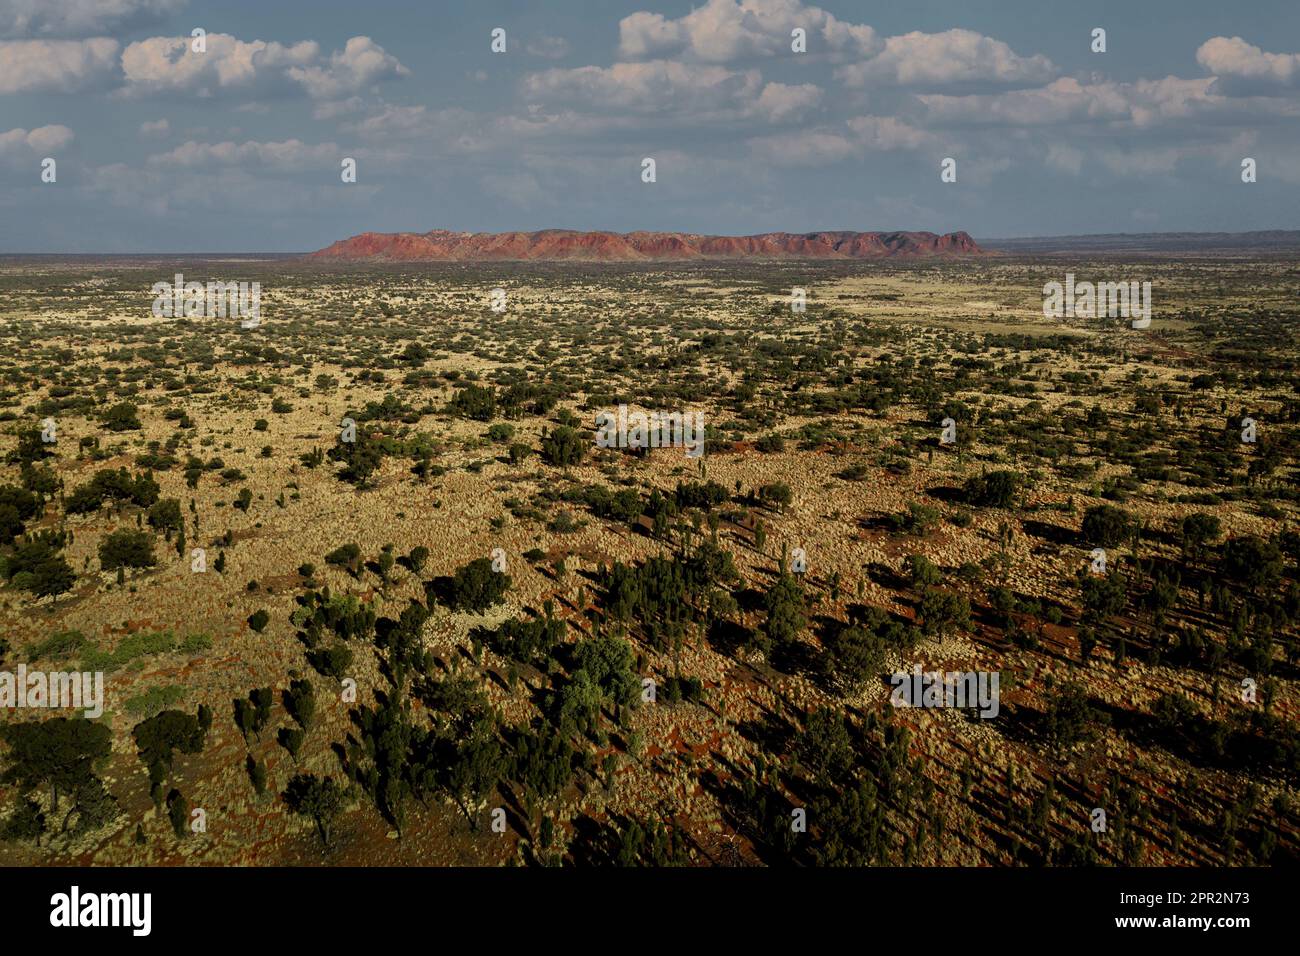 Aerial shot of Tnorala (Gosse Bluff) crater in the desert plains of Central Australia. Stock Photo